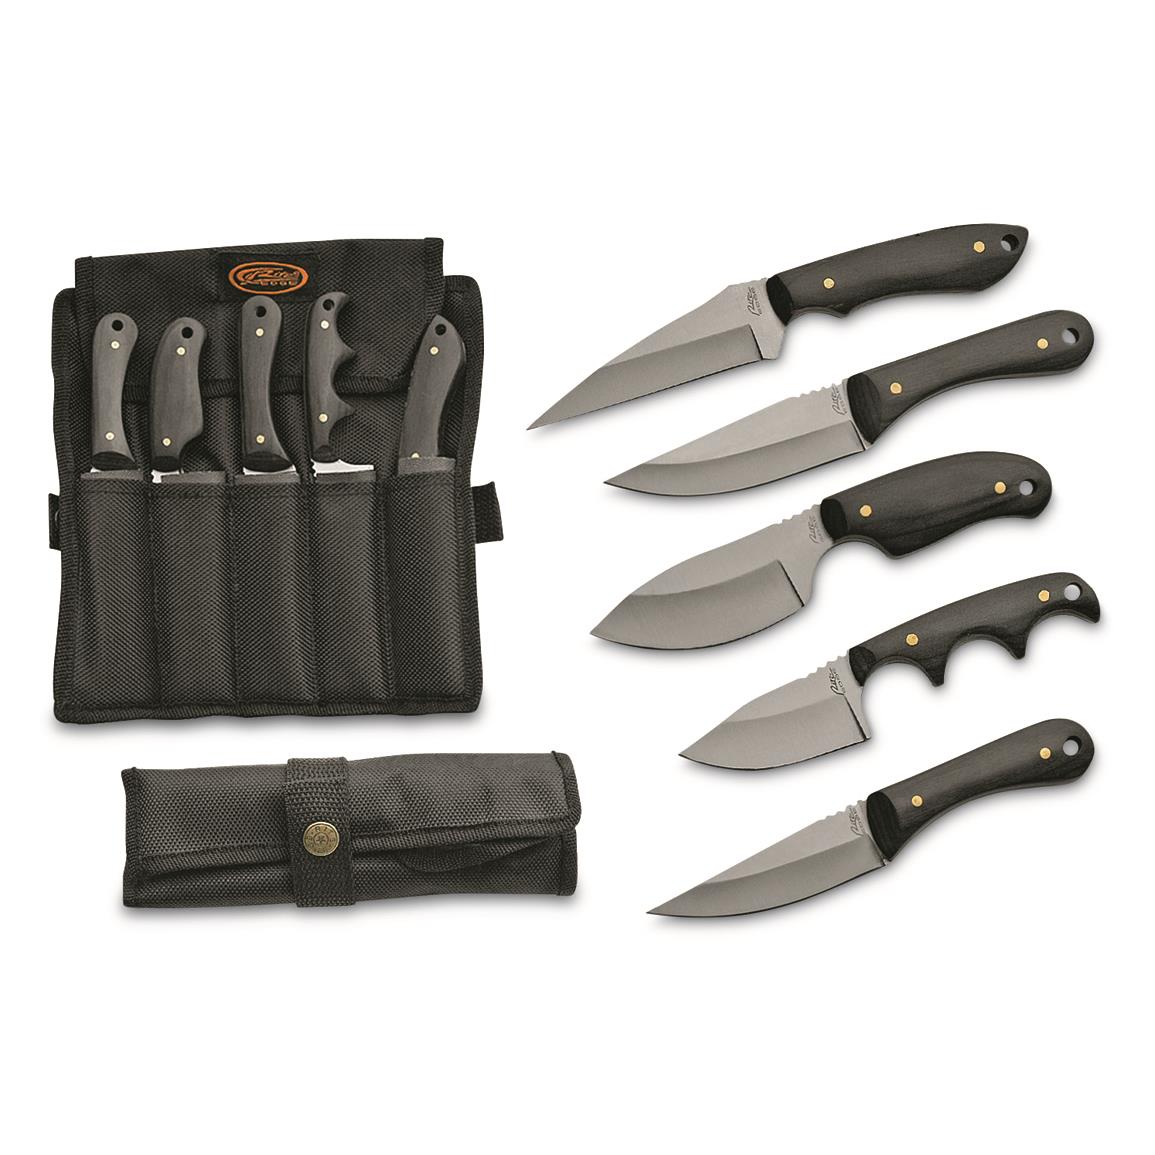 SZCO 5 Piece Skinner Knife Set, Black